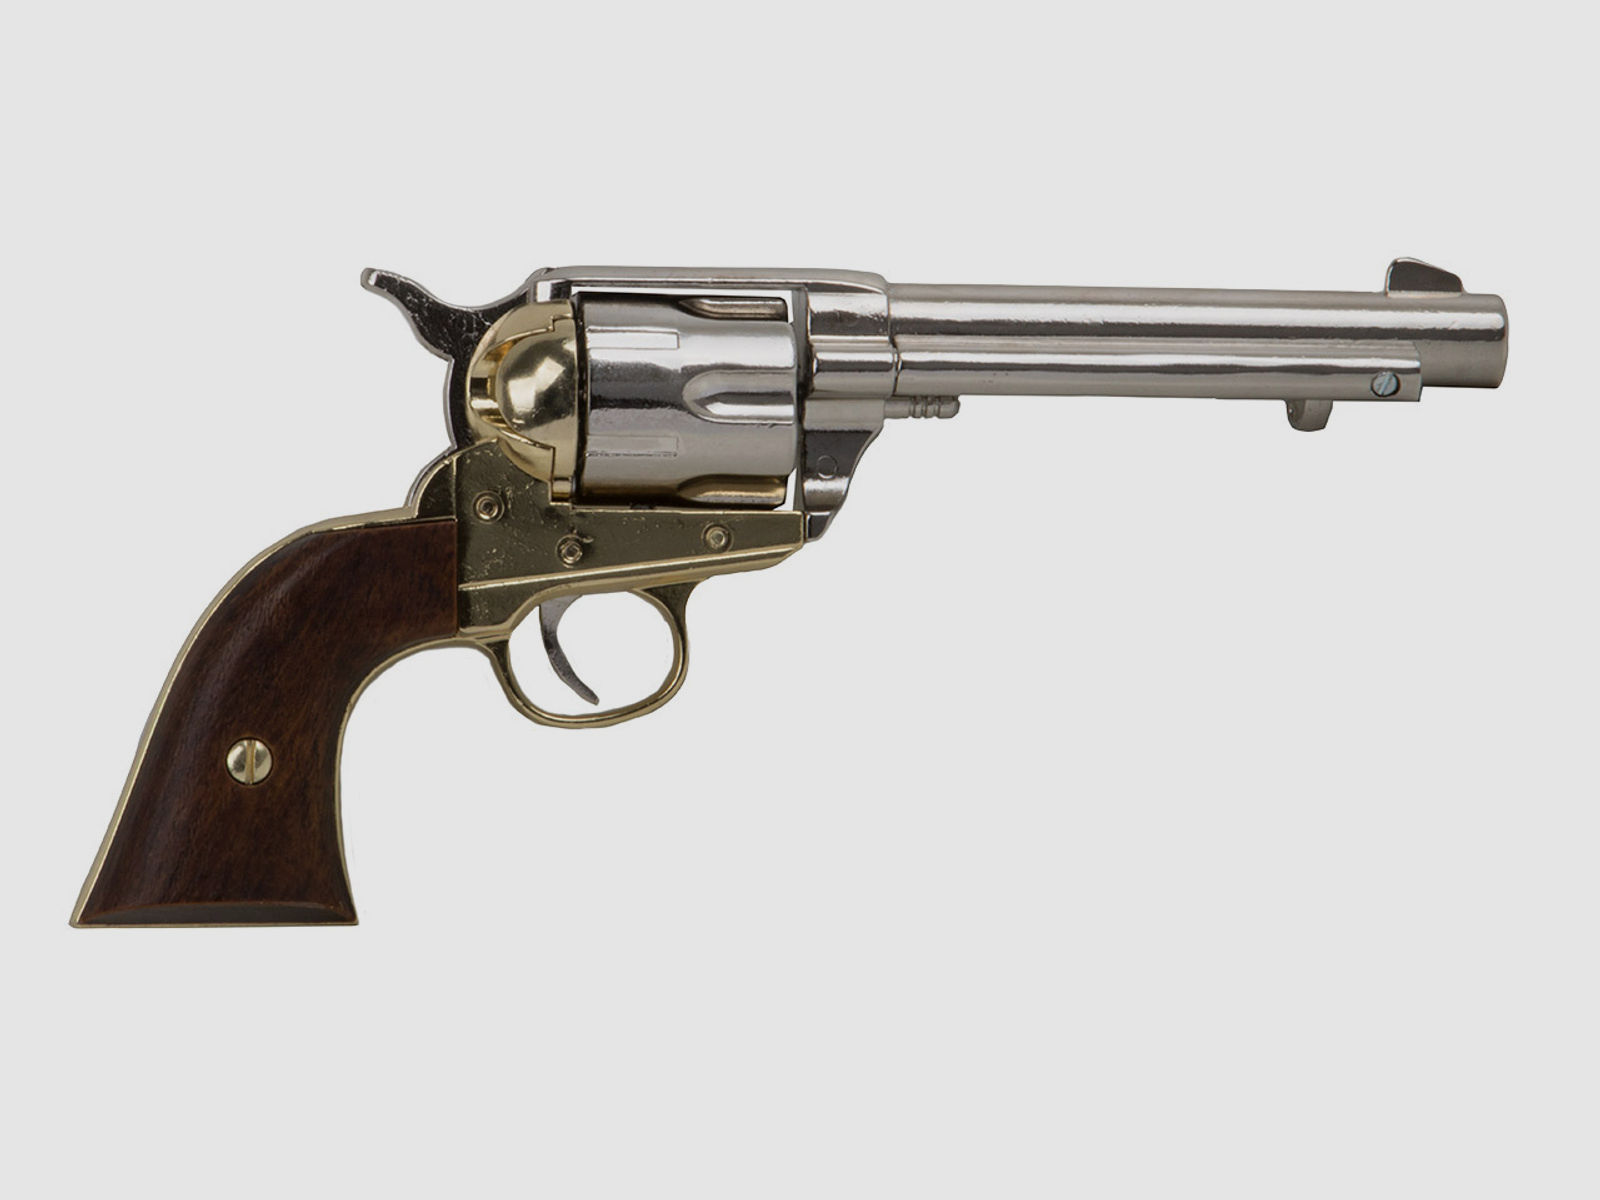 Deko Revolver Kolser Colt SAA .45 Peacemaker USA 1873 5,5 Zoll nickel gold Griffschalen in Holzoptik